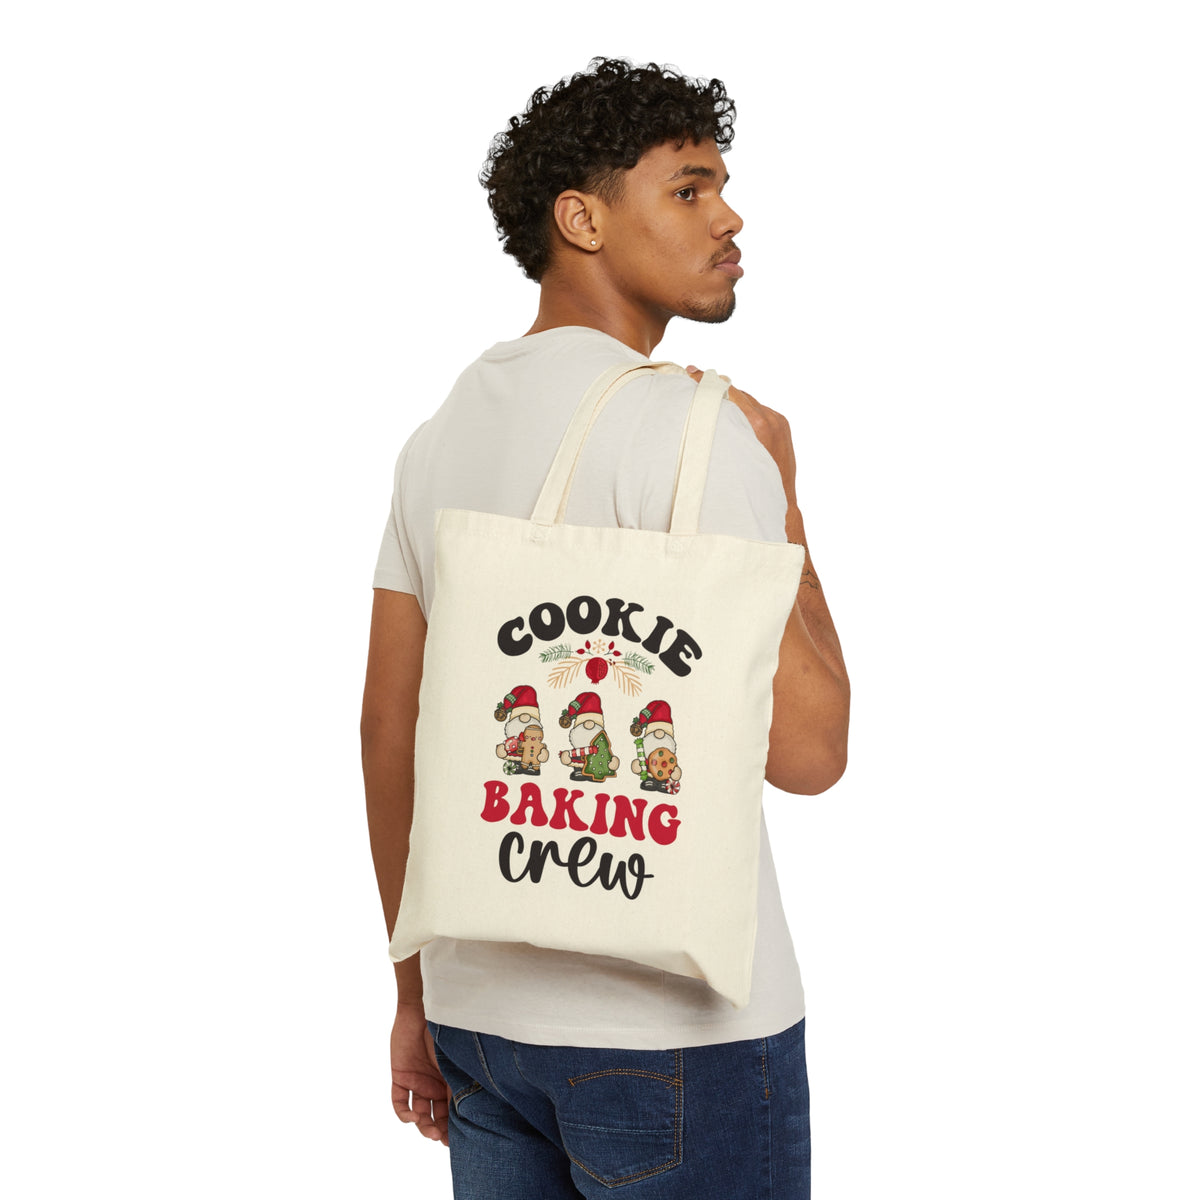 Christmas Cookie Baking Crew Tote Bag | Christmas Tote Bag | Christmas Gift For Her | Canvas Tote Bag